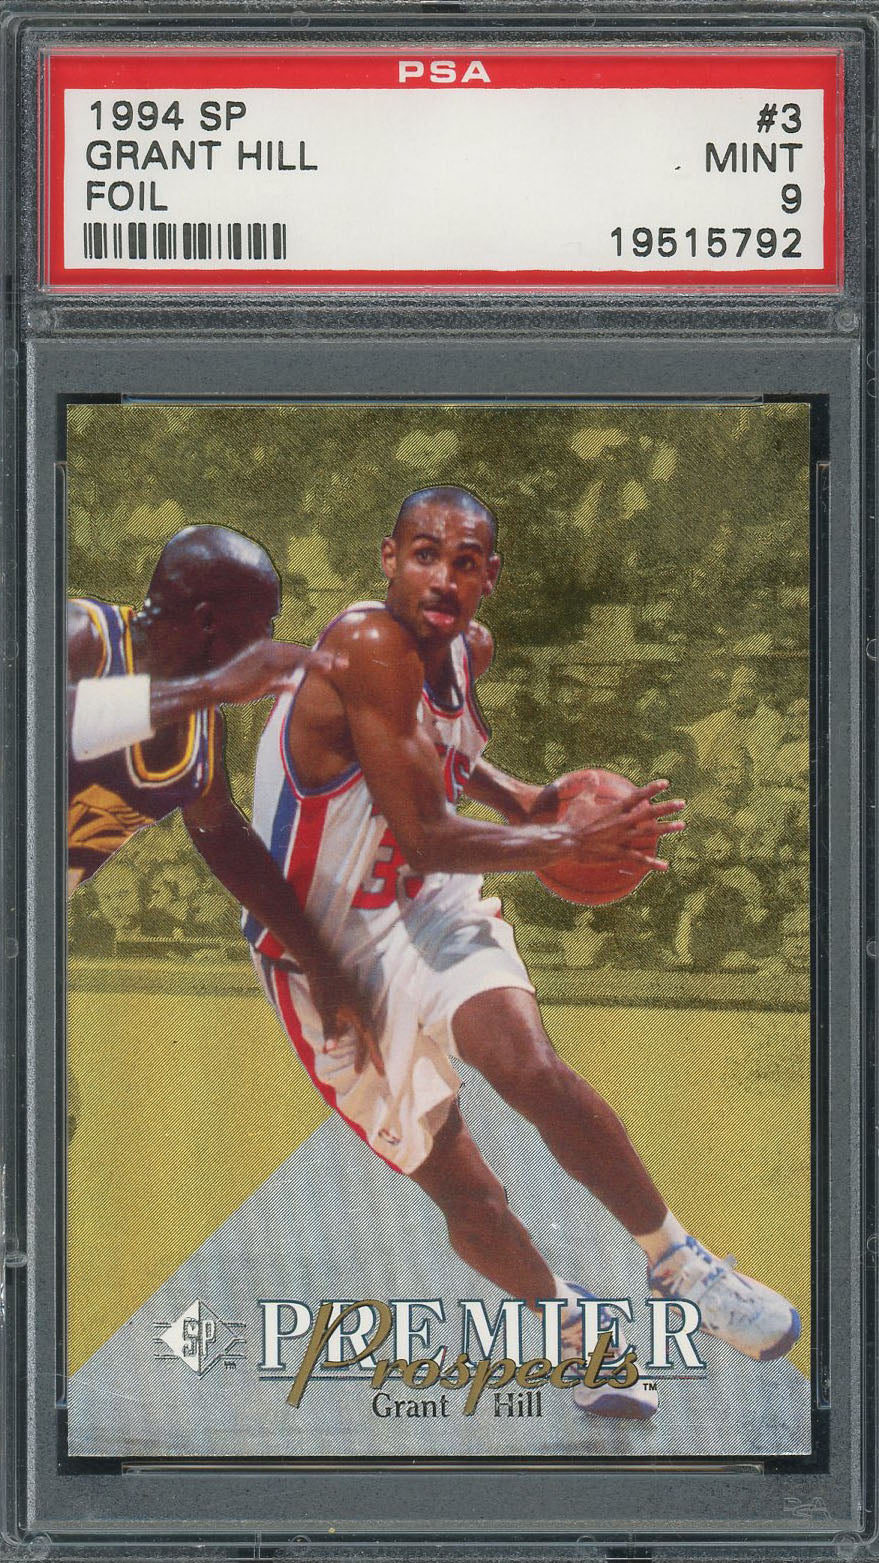 Grant Hill 1994 SP Upper Deck Foil Basketball Rookie Card RC #3 Graded PSA 9 MINT-Powers Sports Memorabilia